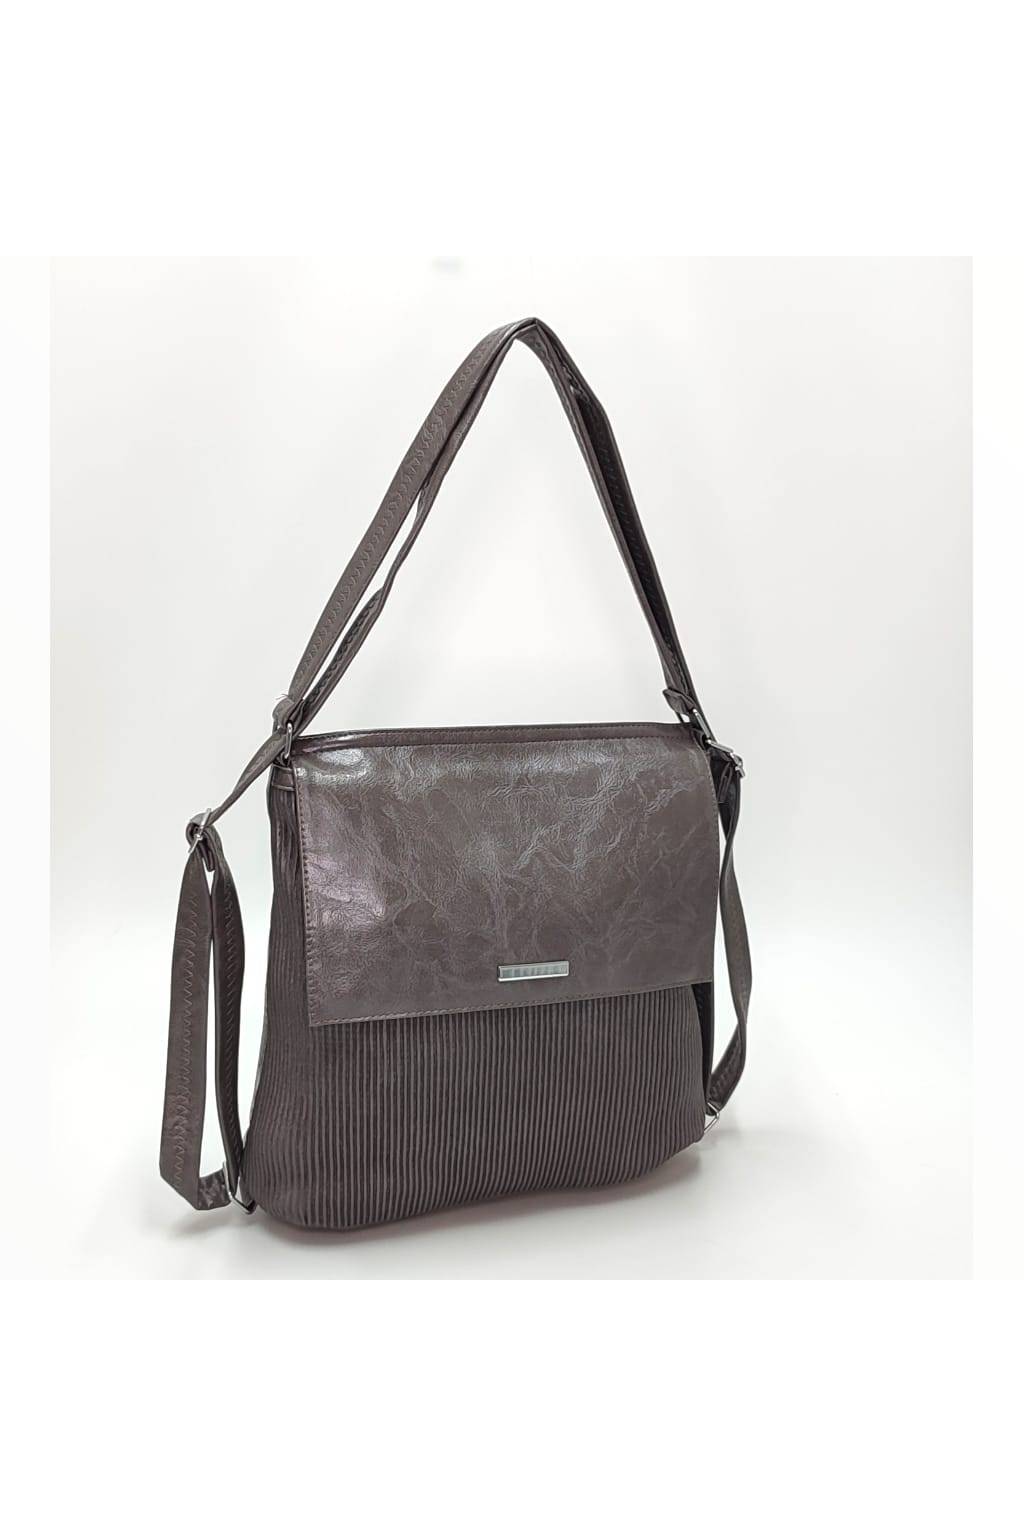 Dámska kabelka ruksak 2v1 S1822 tmavo sivá www.kabelky vypredaj (6)